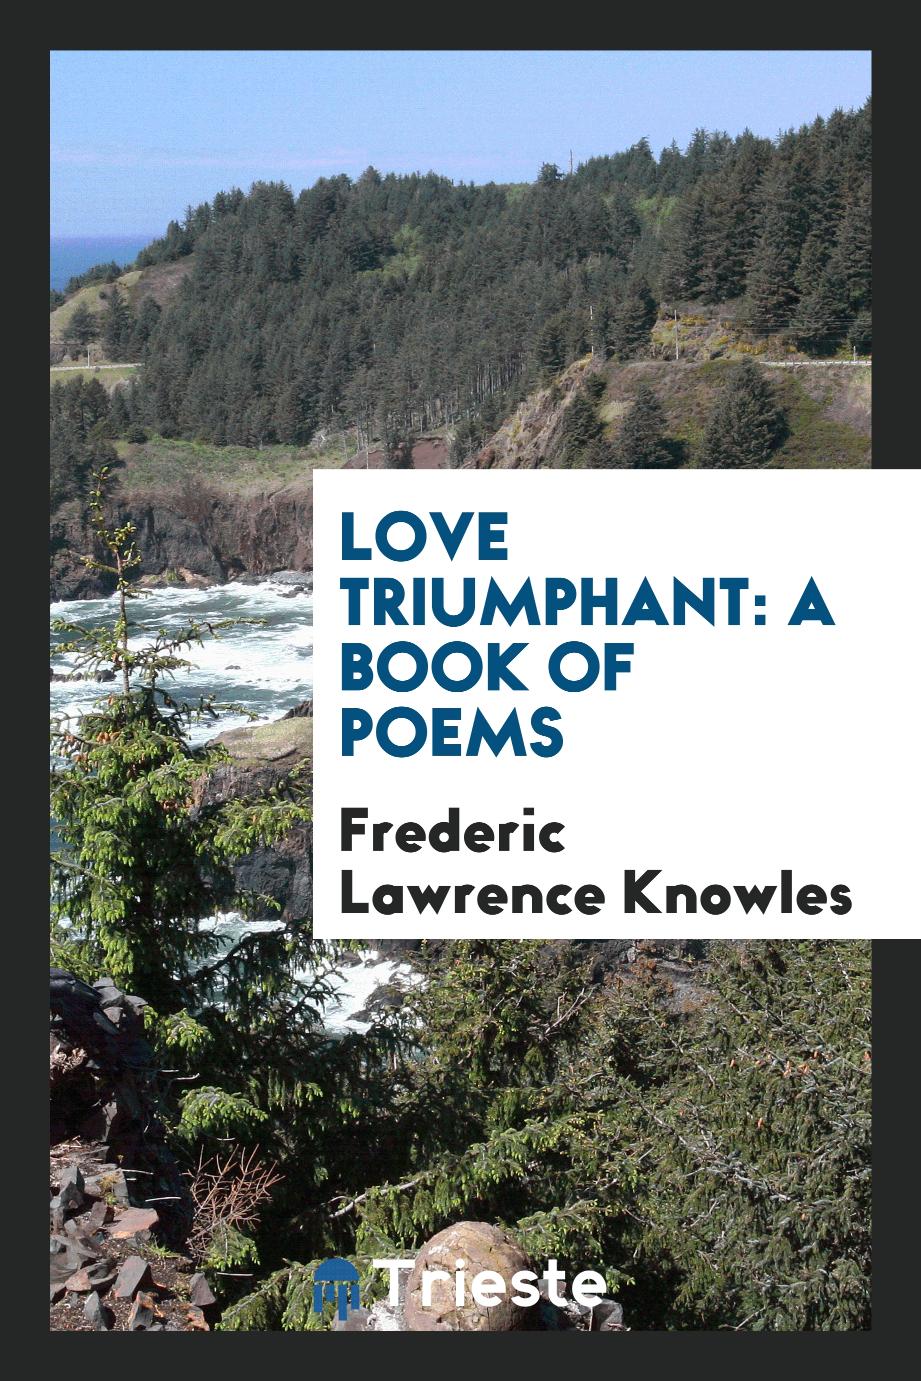 Love triumphant: A book of poems